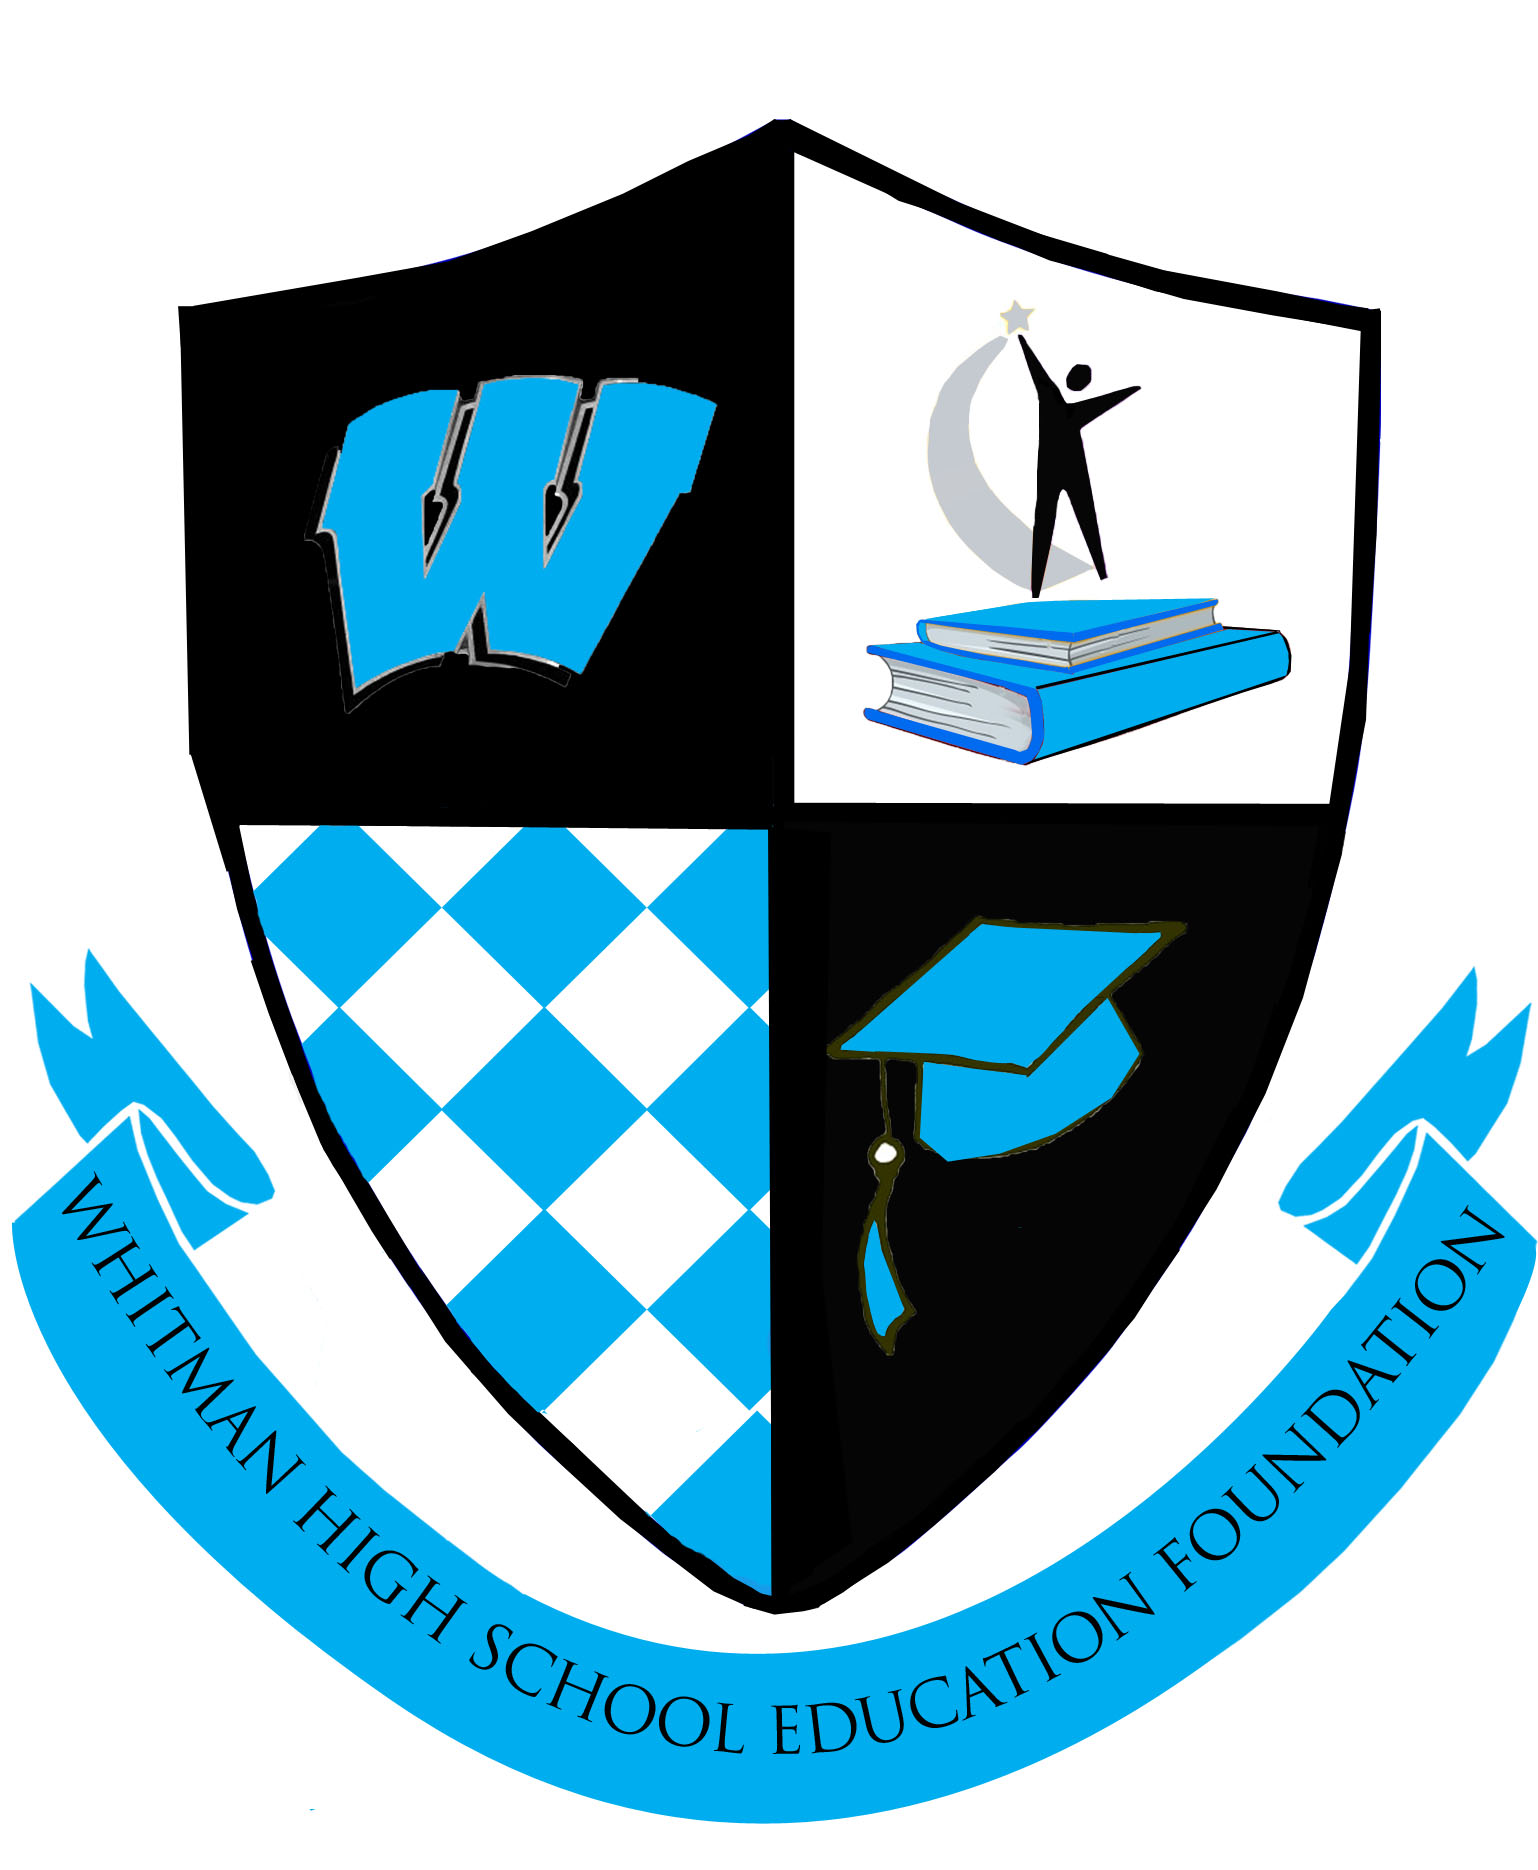 Whitman High School Education Foundation logo